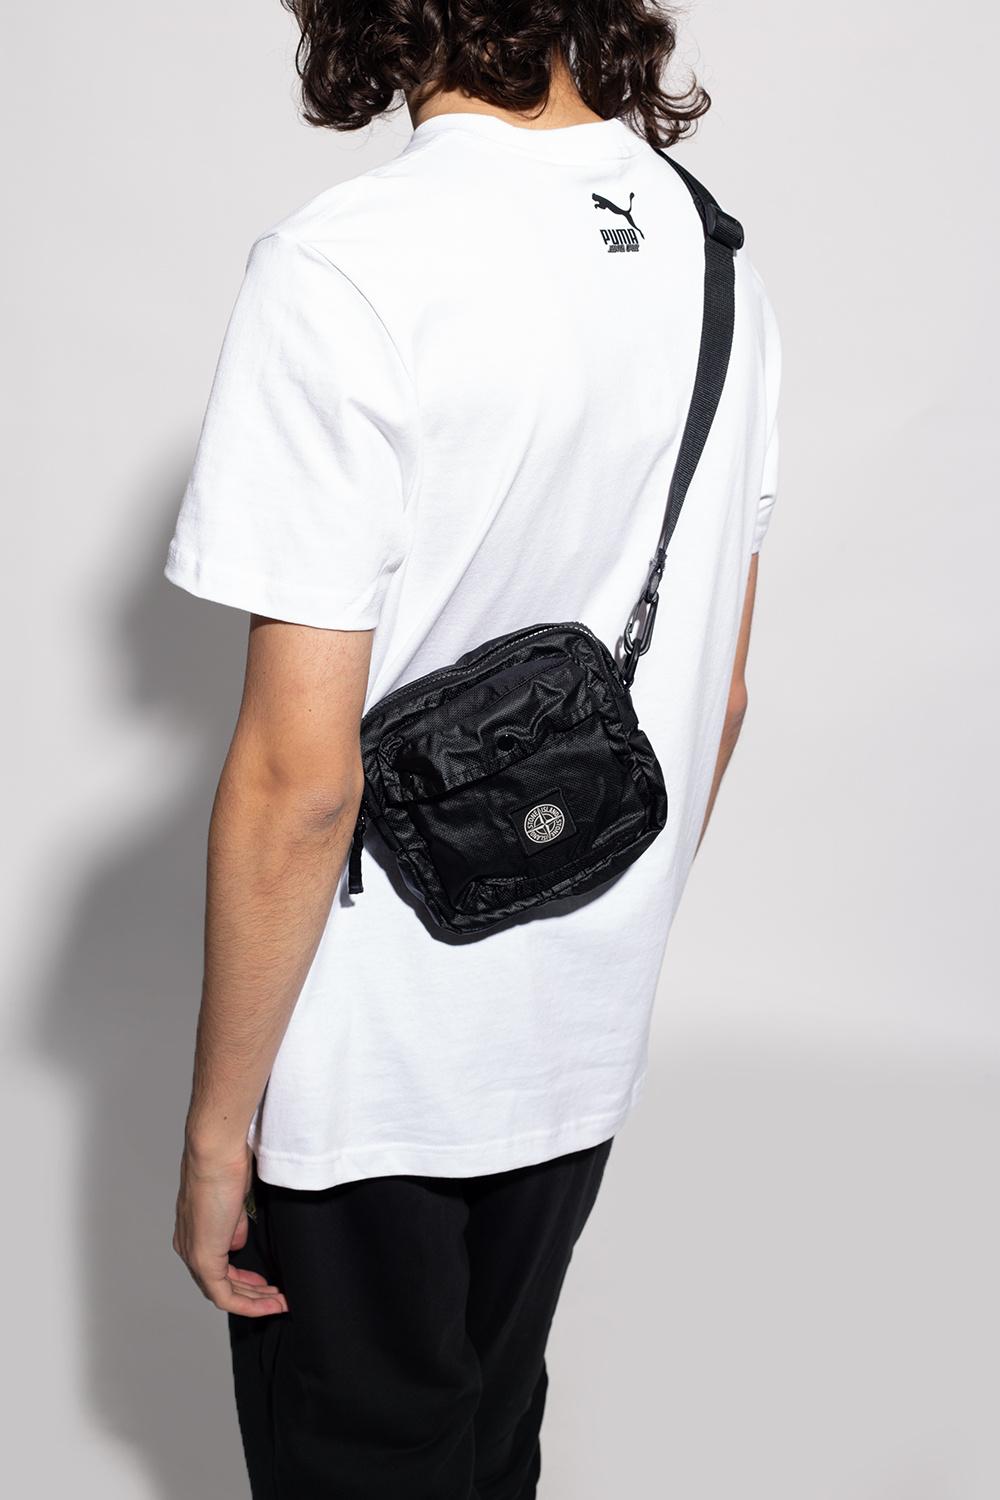 Stone Island Shoulder Bag With Logo in Black for Men | Lyst